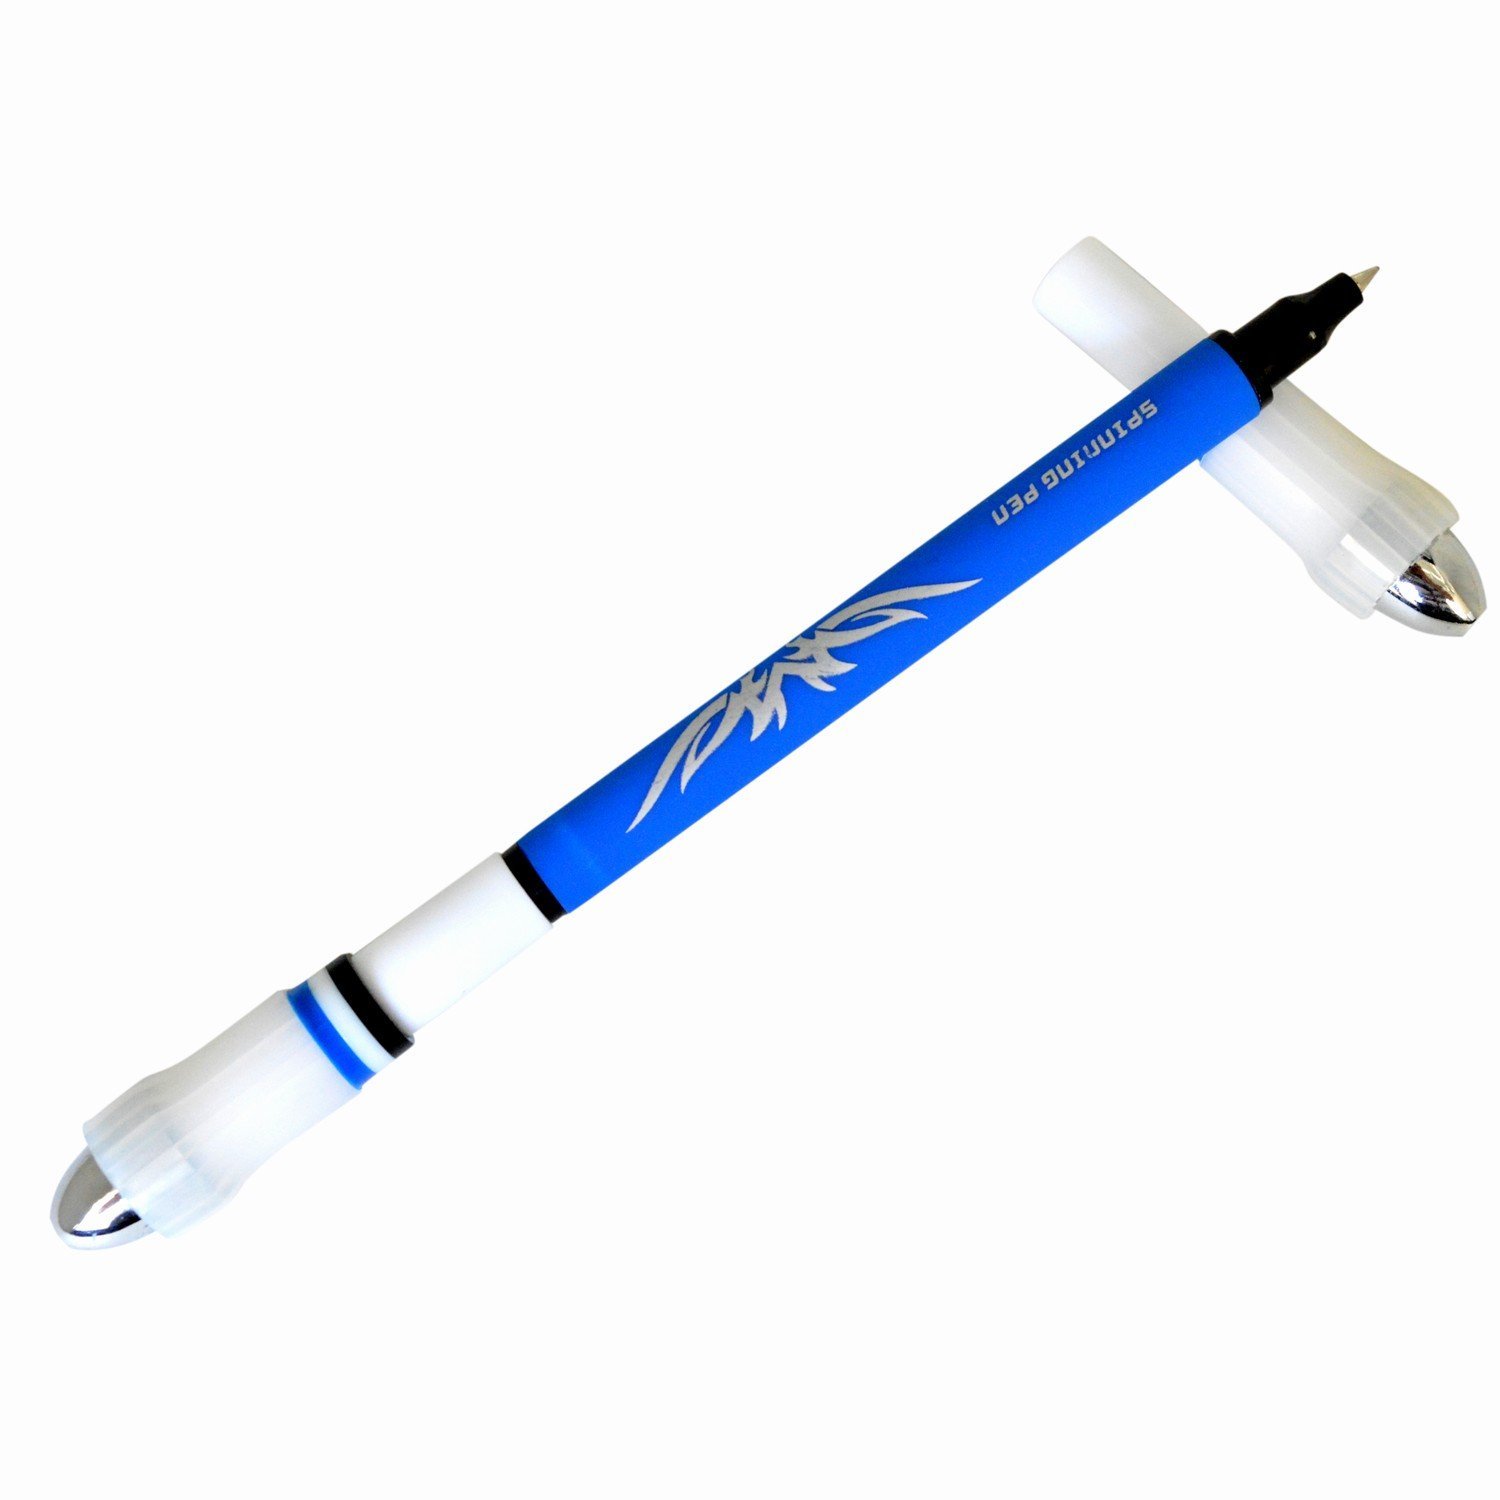 Spin pen. Ручка для Pen Spinning-Zhigao Spinning pe v7. Zhigao. Трюки с ручкой. Ручка для Pen Spinning металлическая.